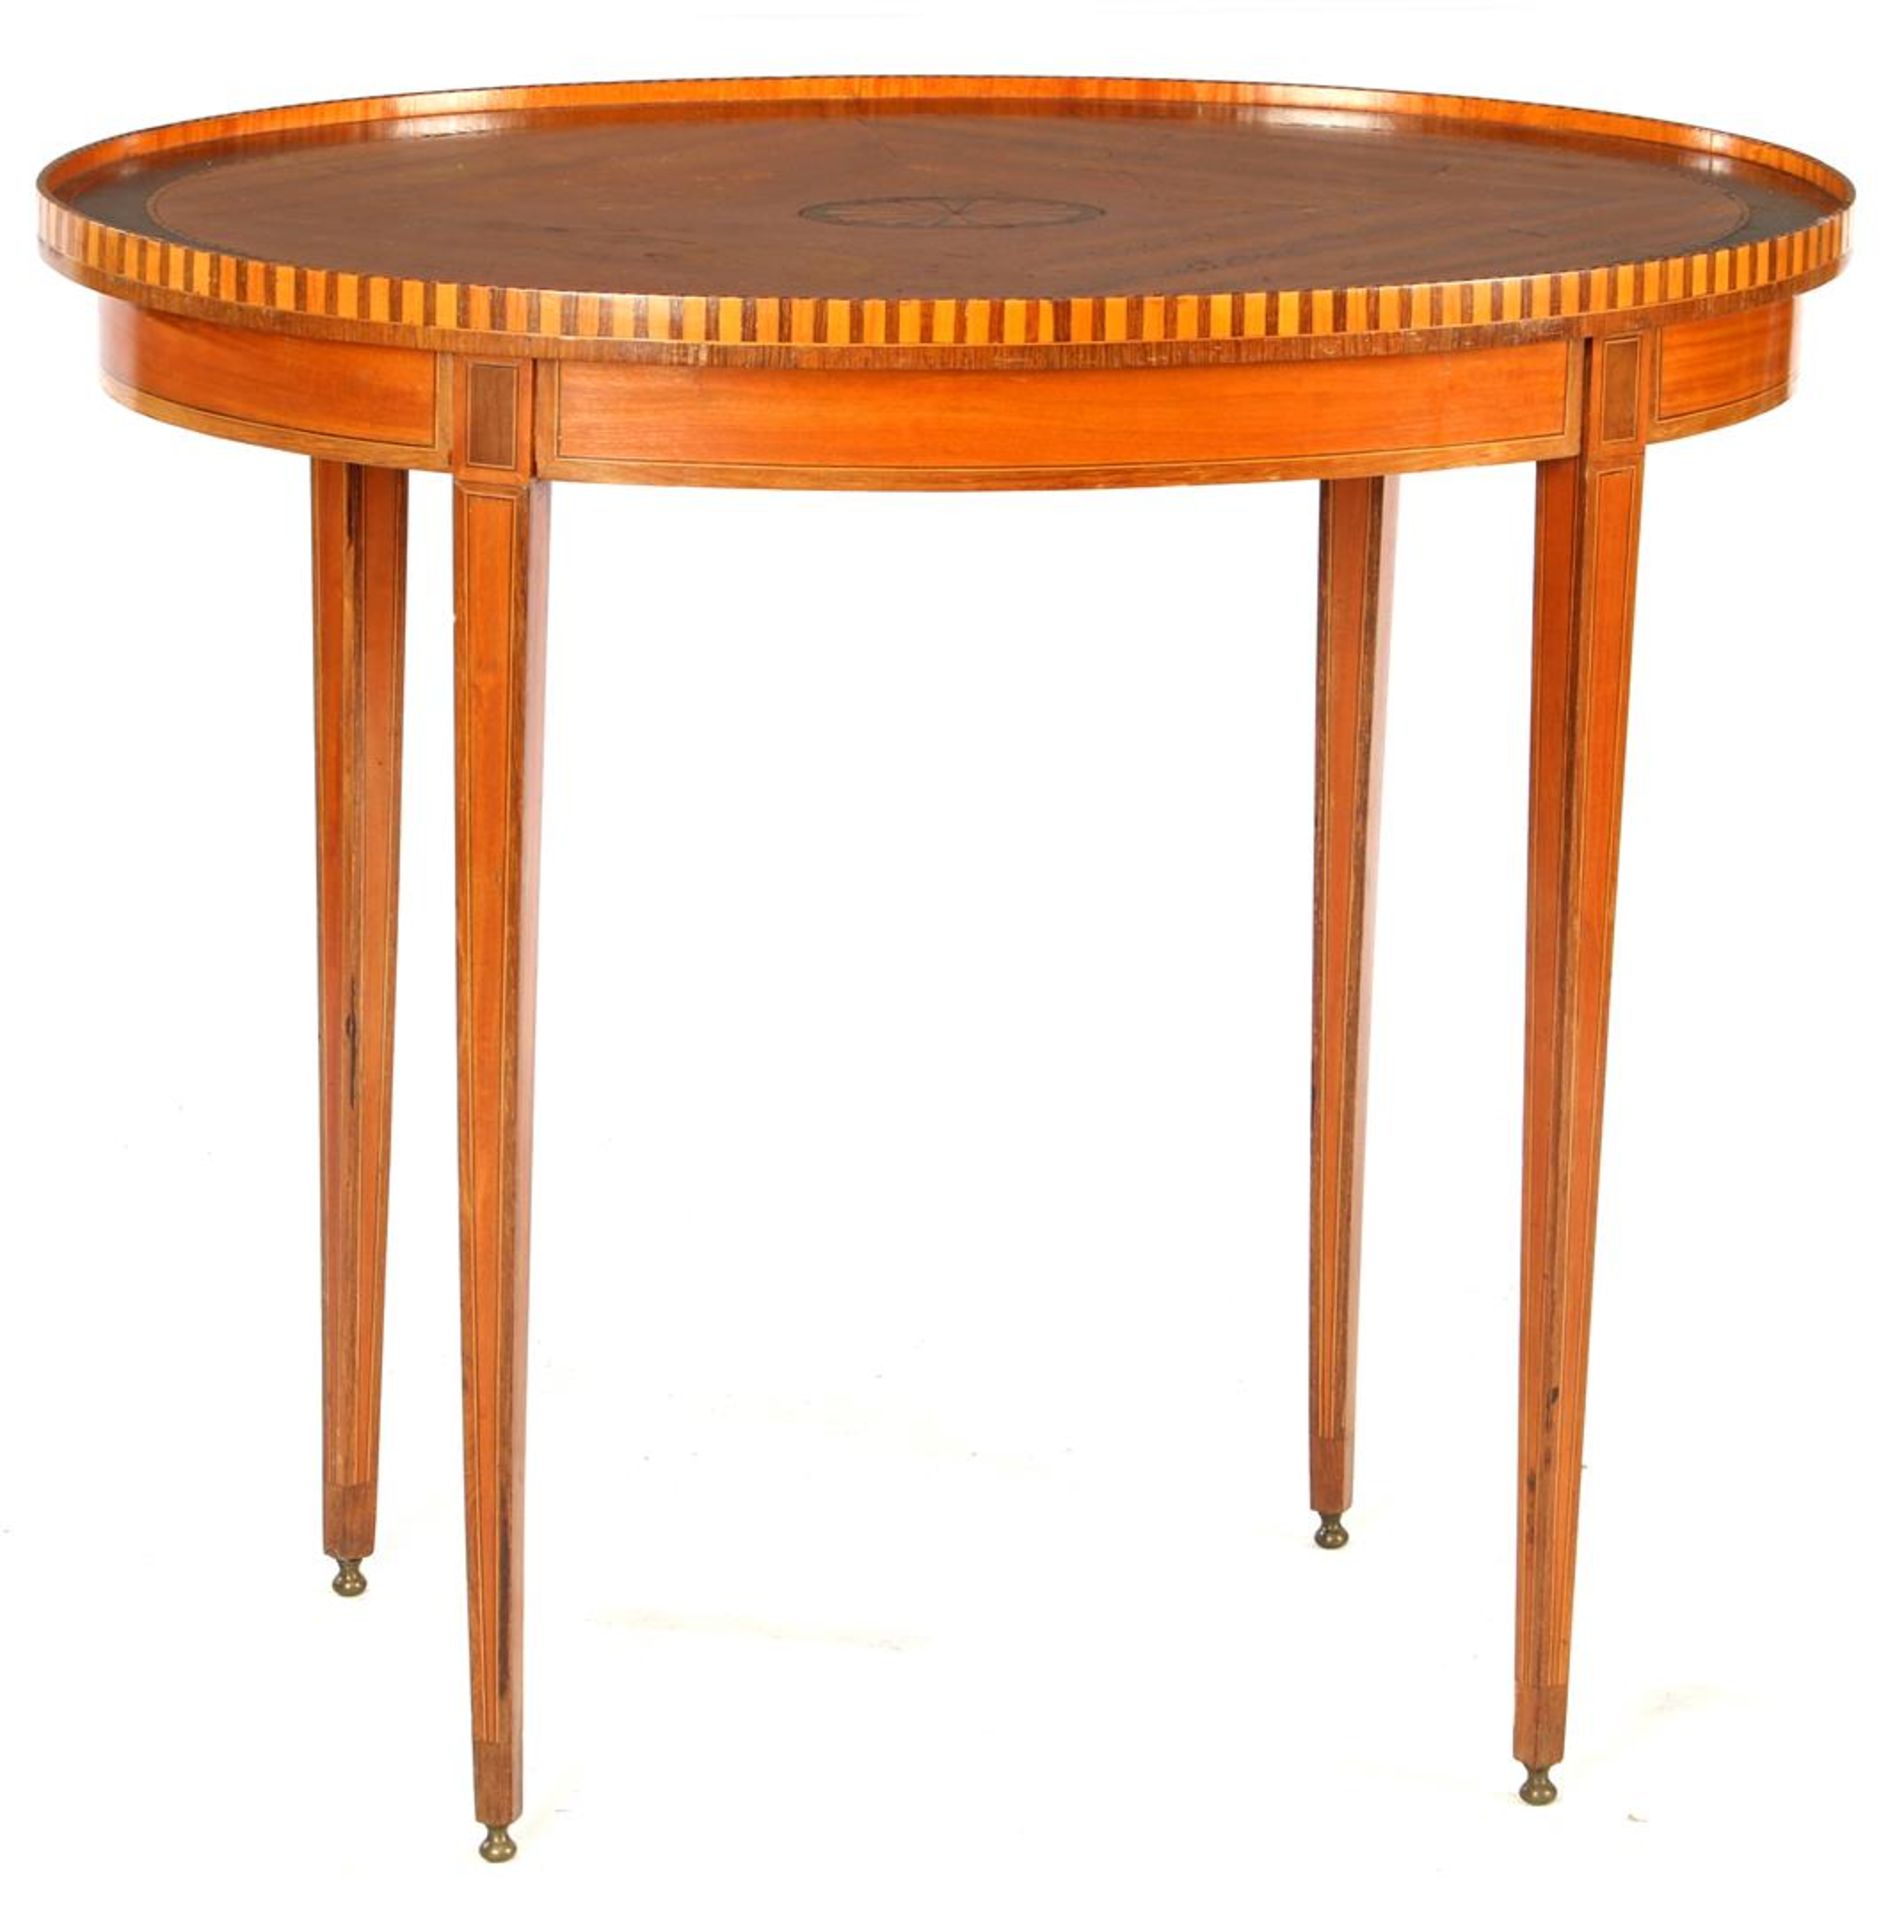 Oval oak table with several types of wood veneer 